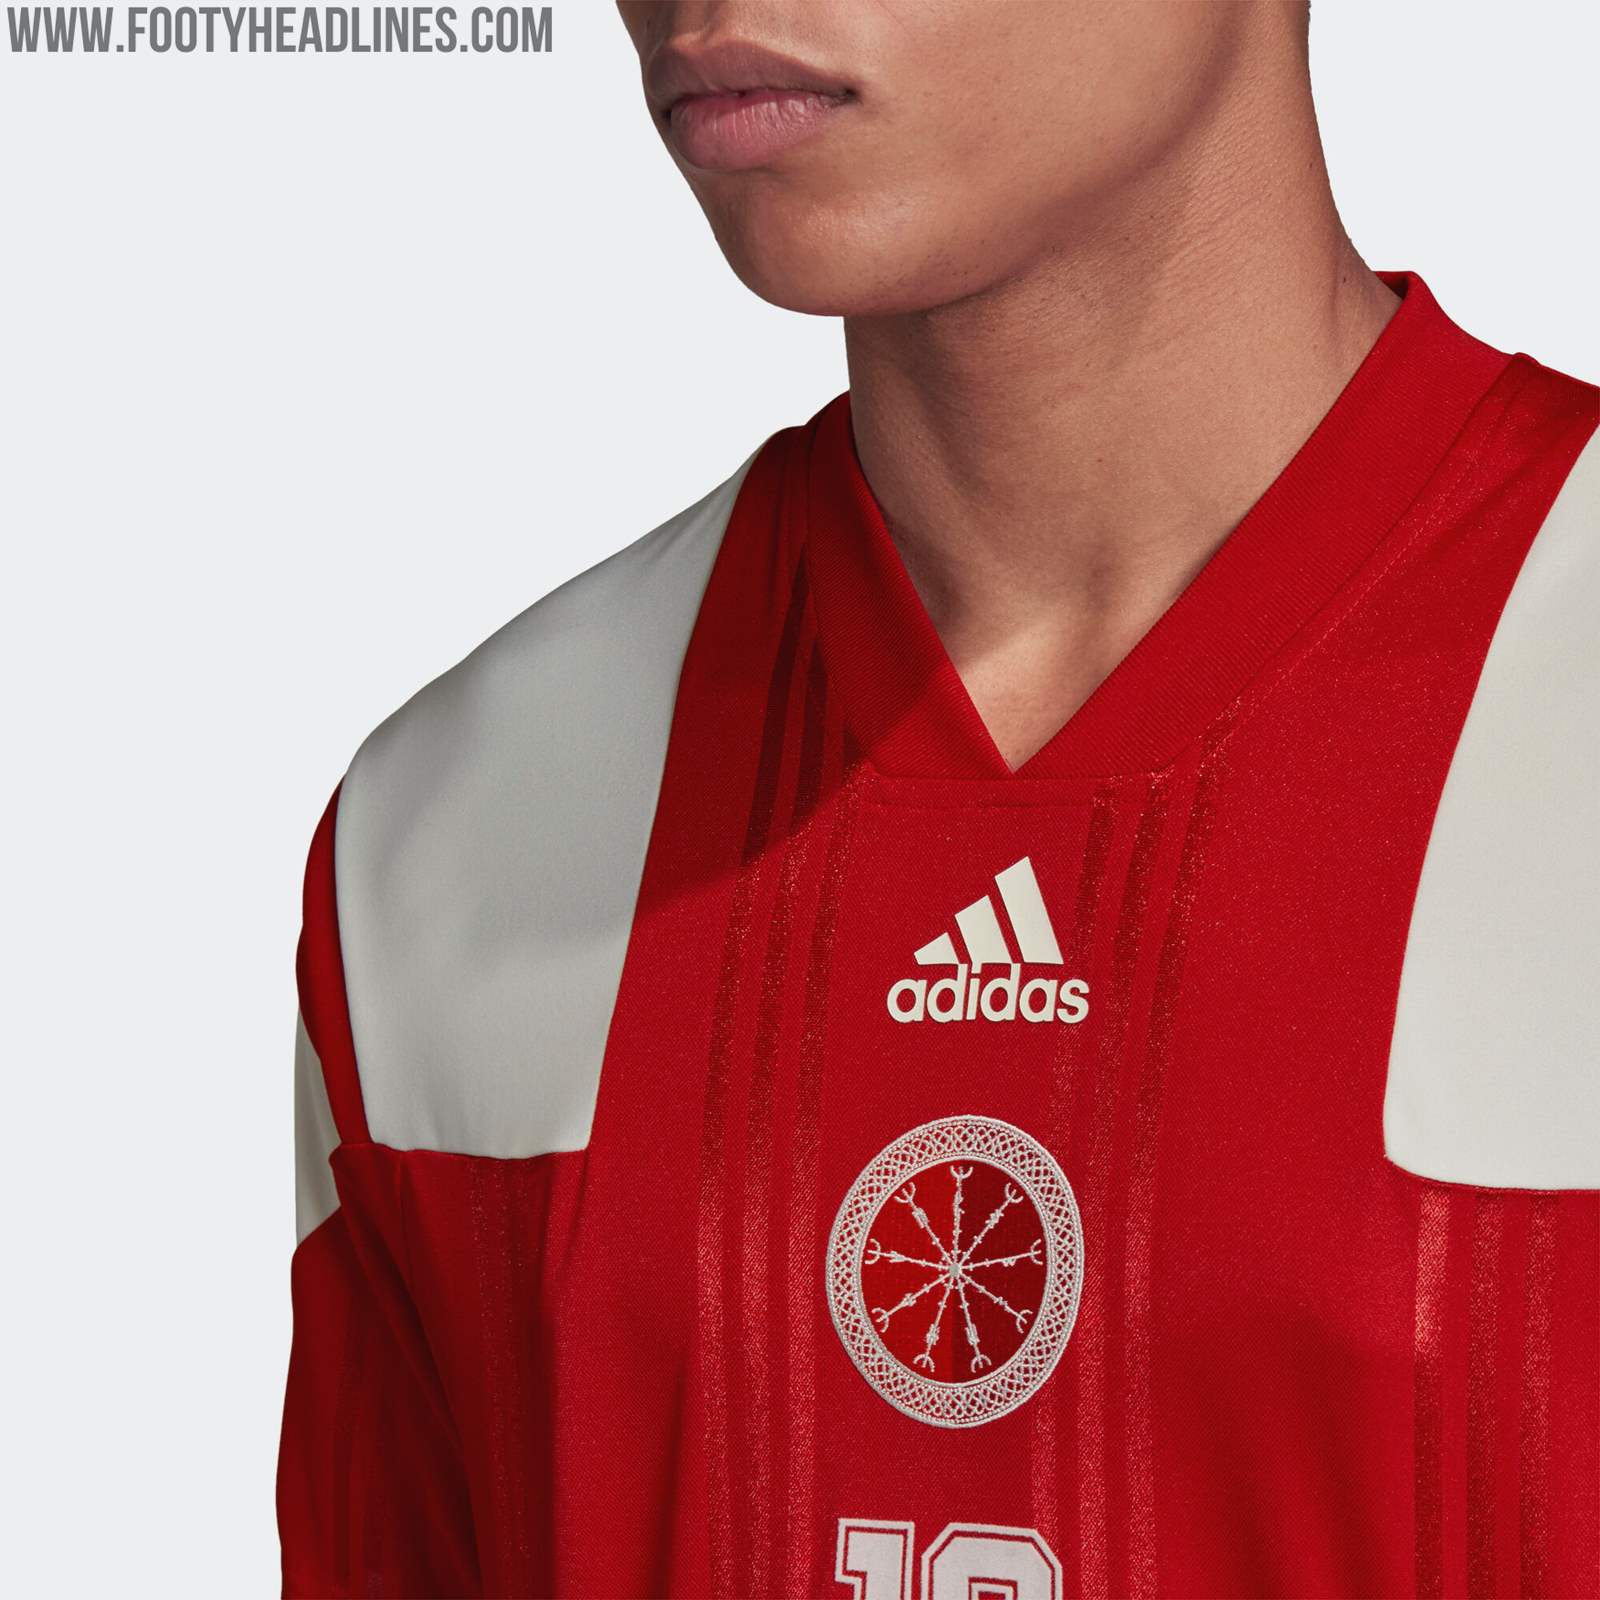 Adidas EM 2020 Kopenhagen City Trikot geleaked - Nur Fussball